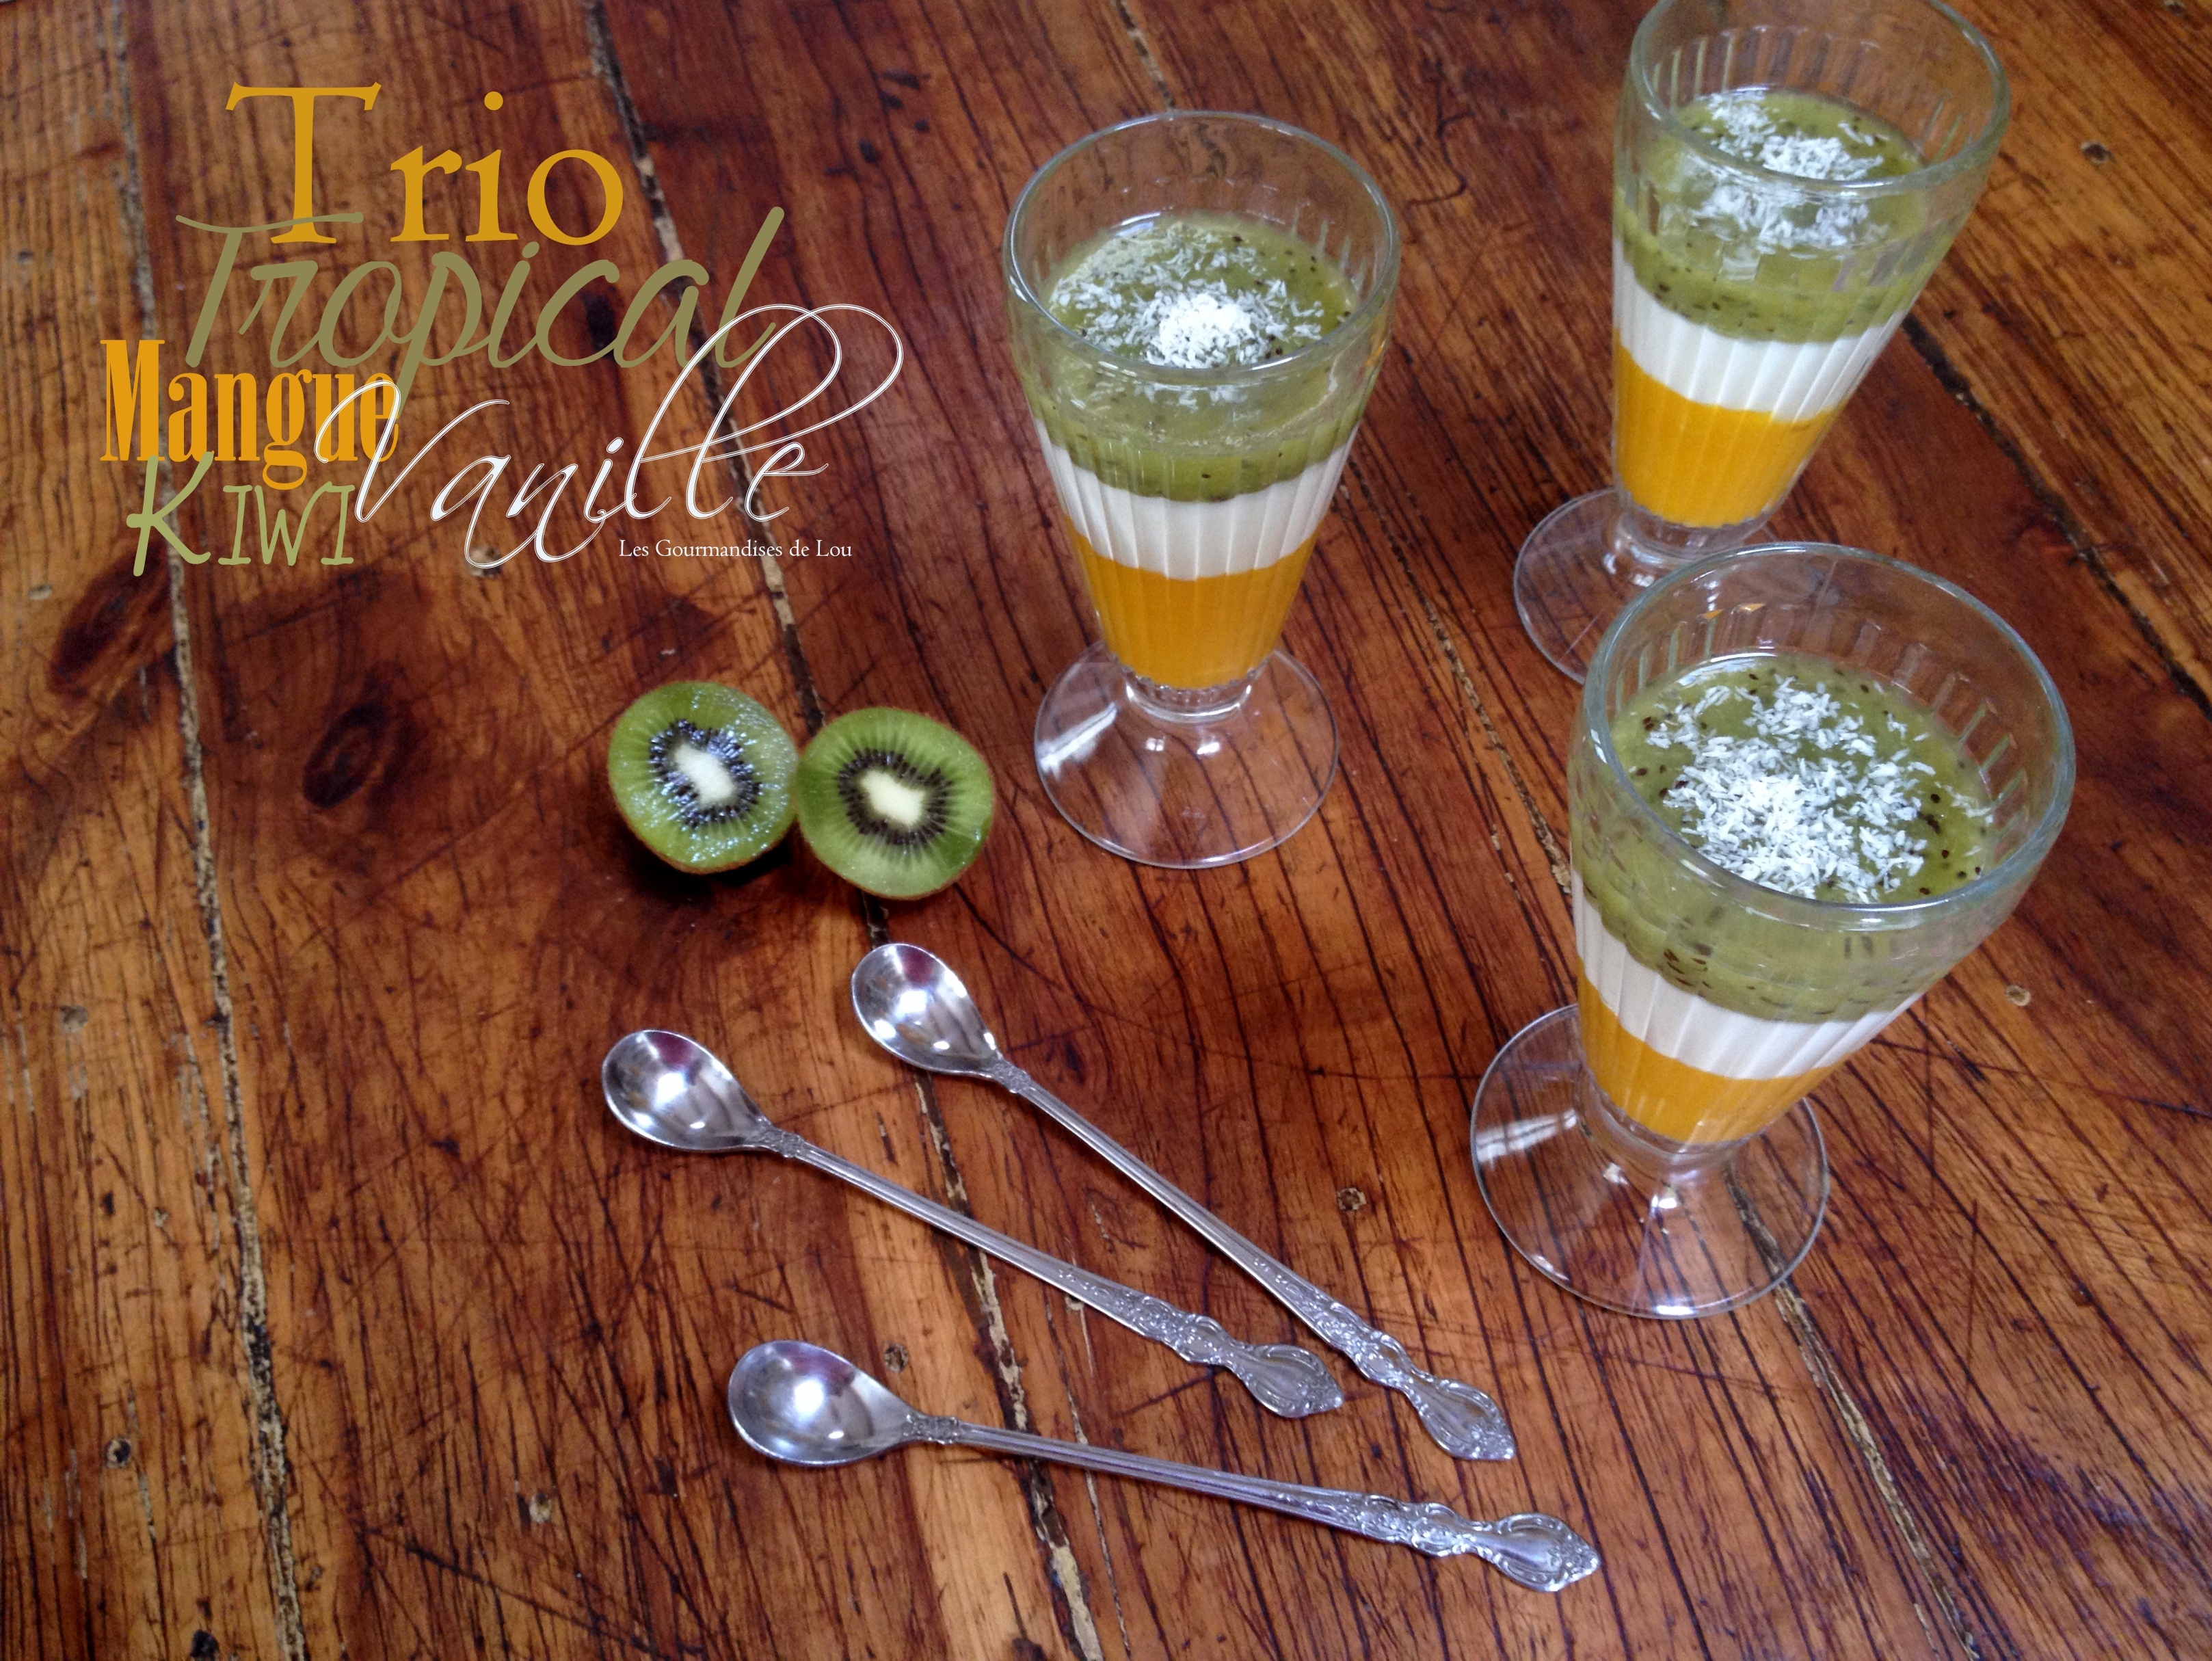 Trio tropical mangue vanille kiwi